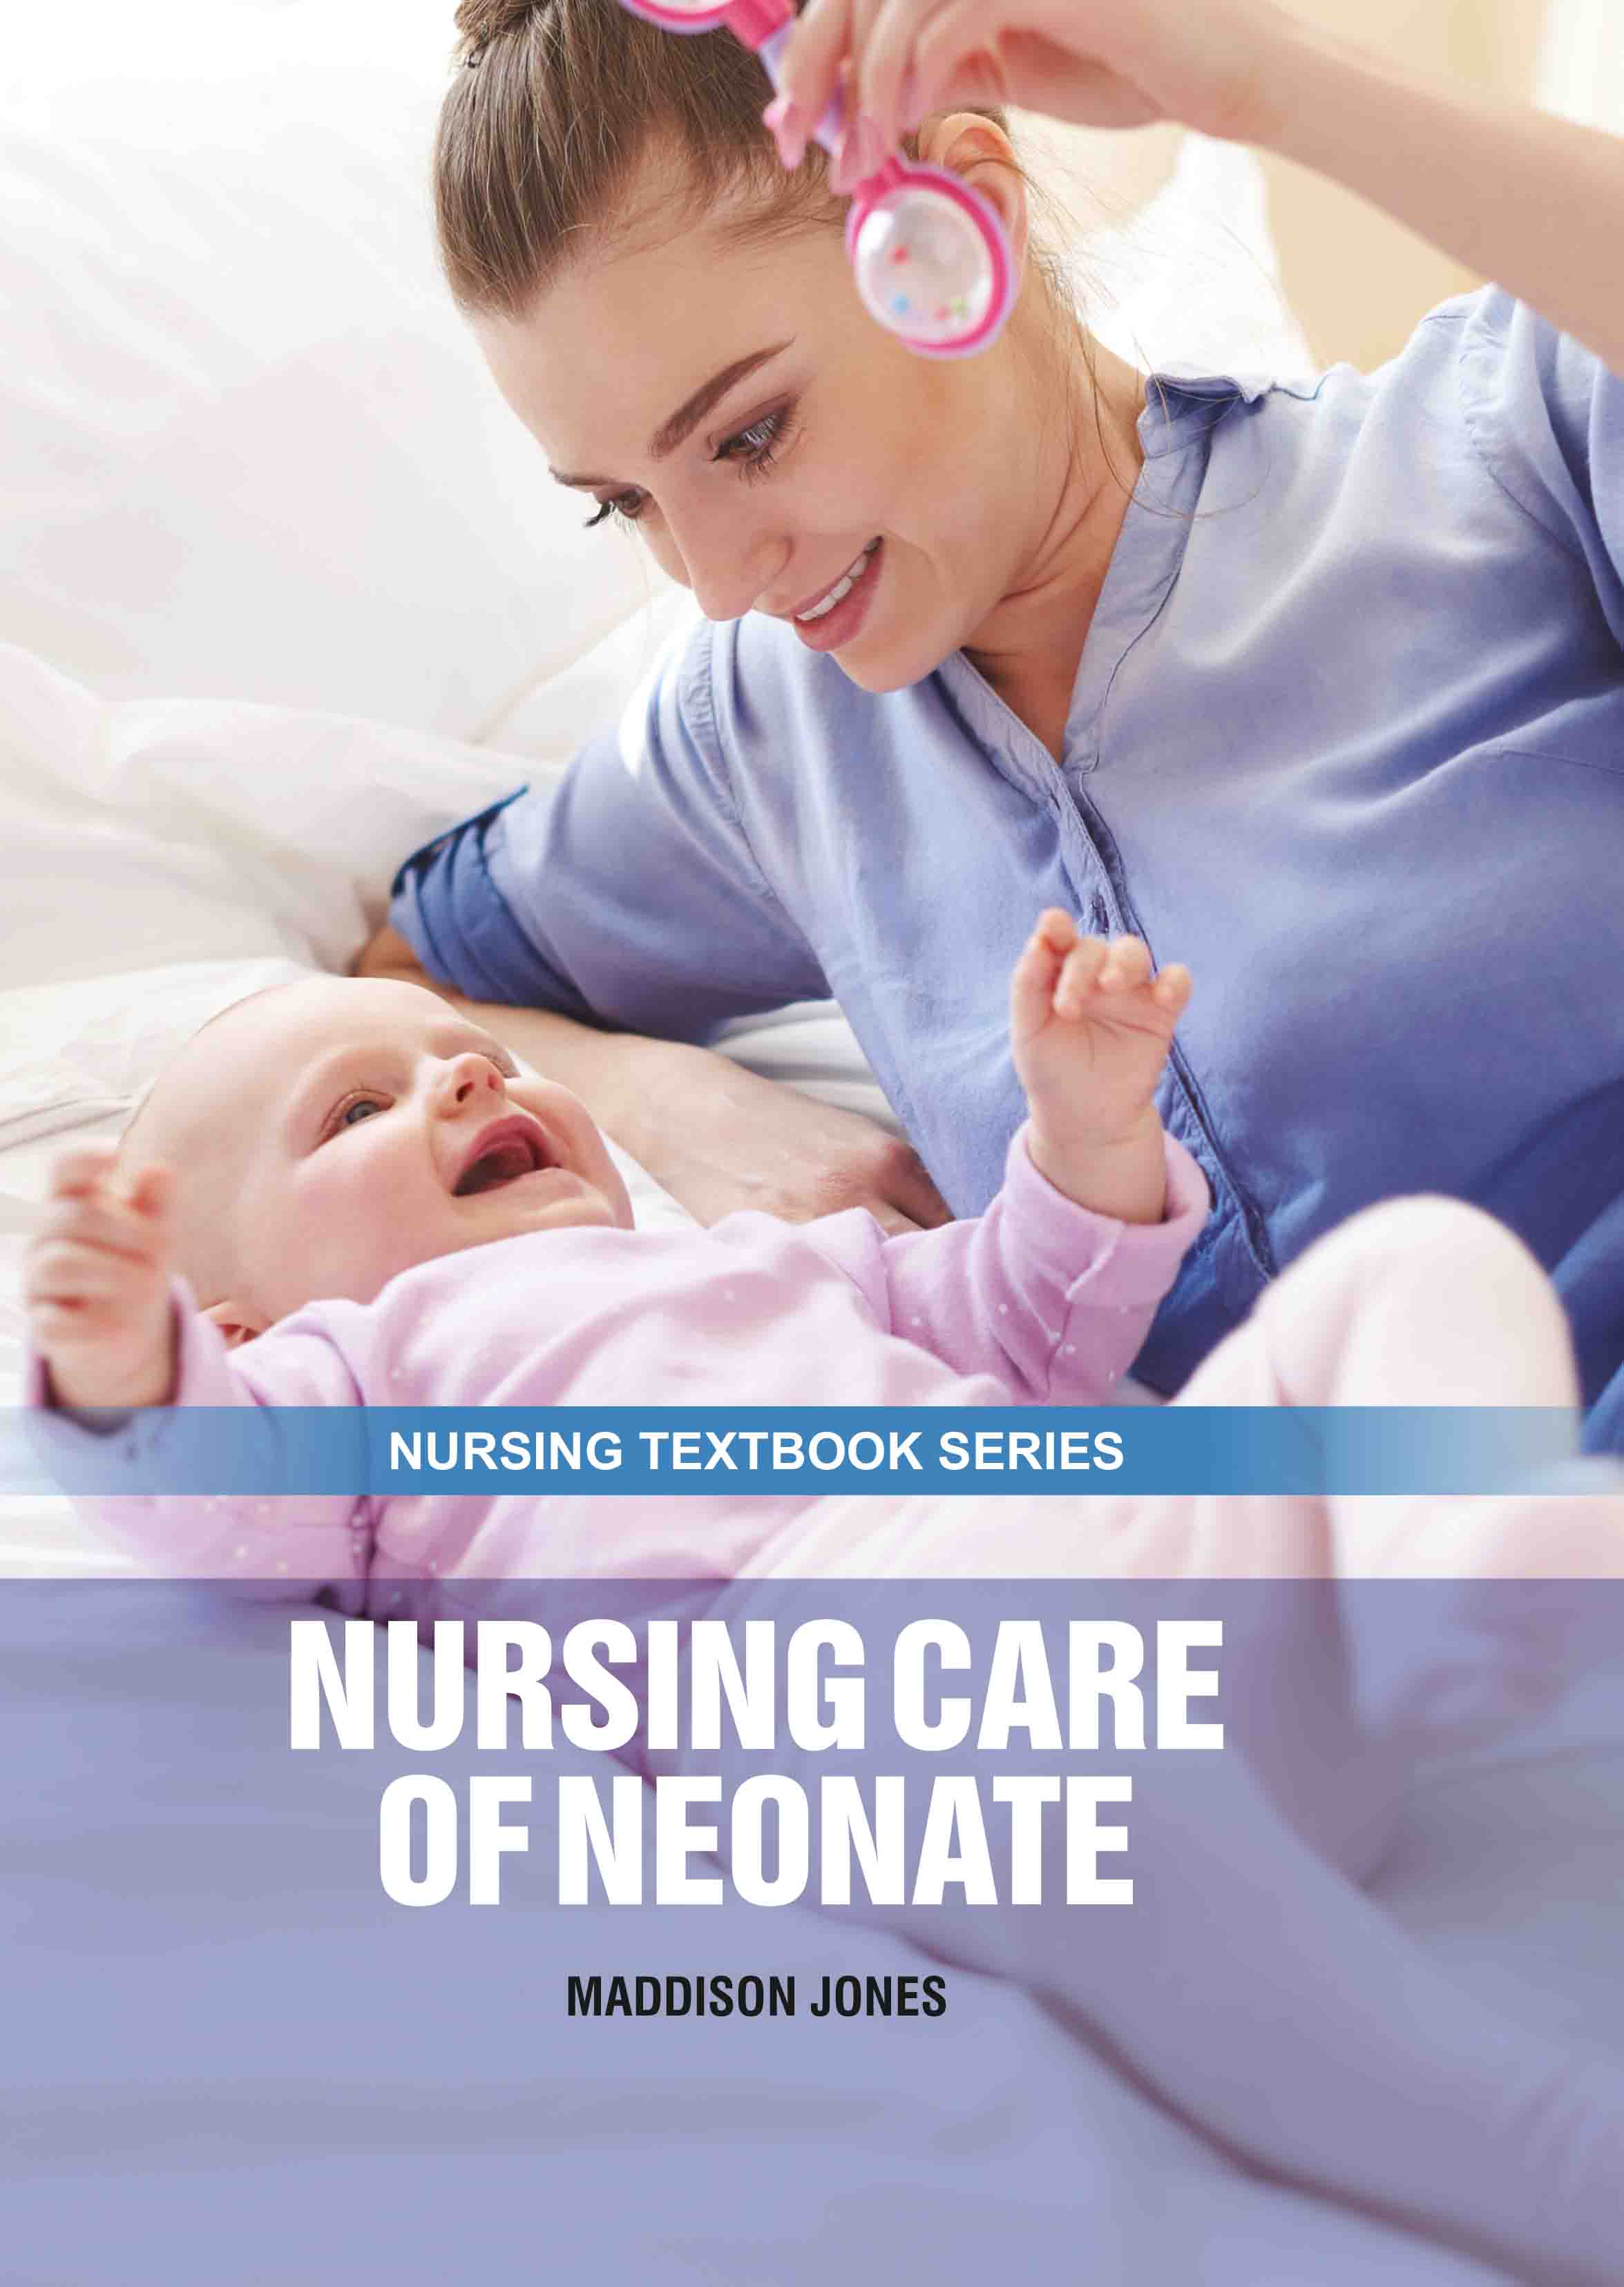 Nursing care of neonate